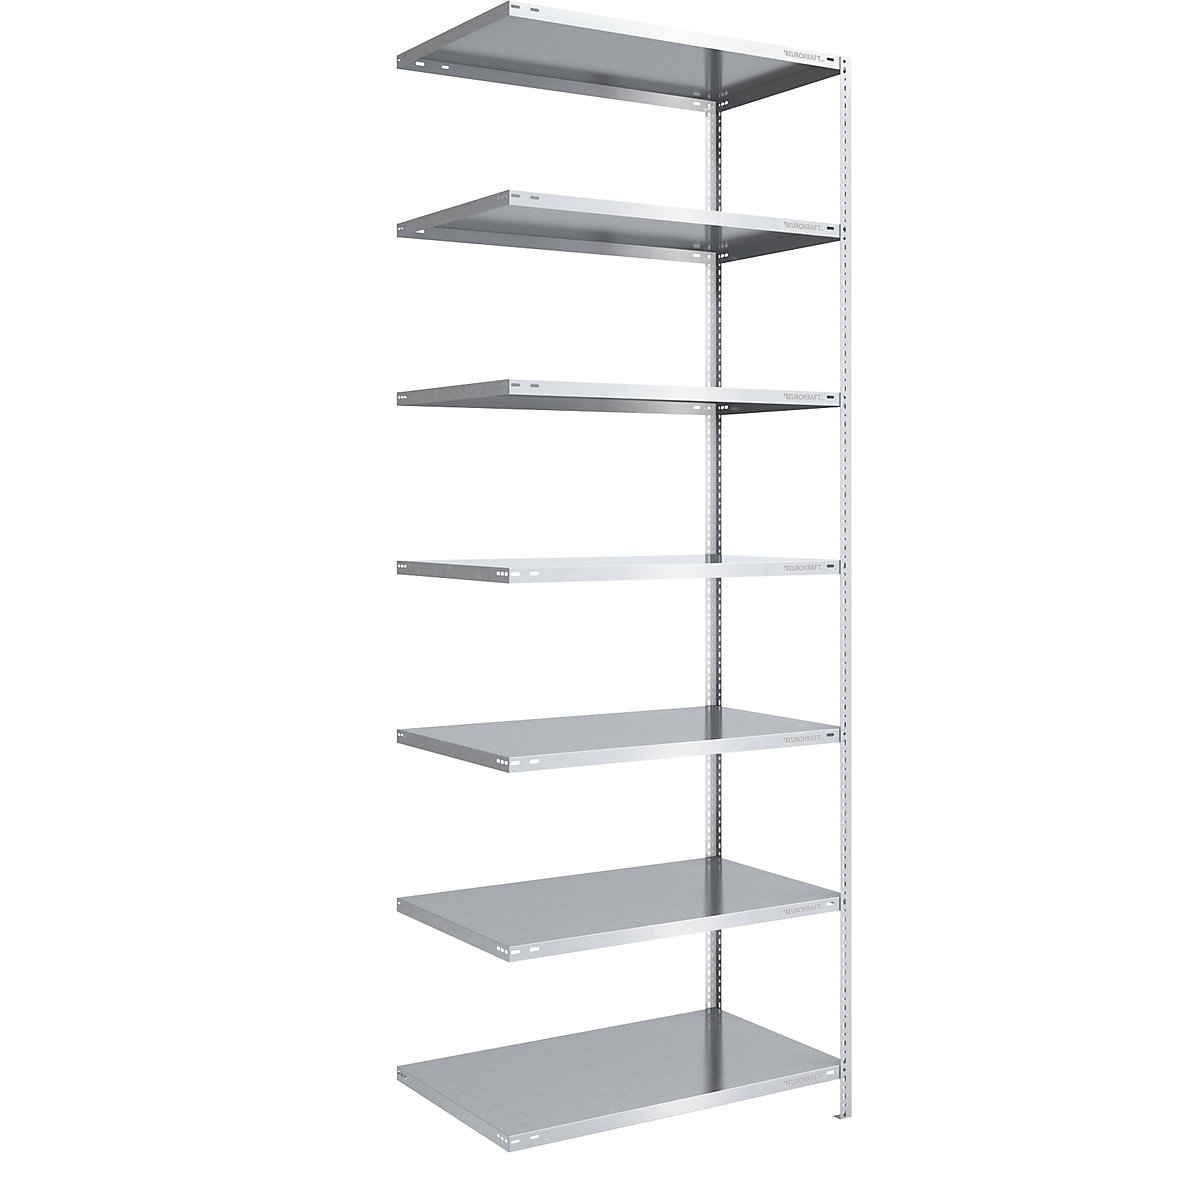 Bolt-together storage shelving, zinc plated, medium duty – eurokraft pro, shelf unit height 3000 mm, shelf width 1000 mm, depth 800 mm, extension shelf unit-10